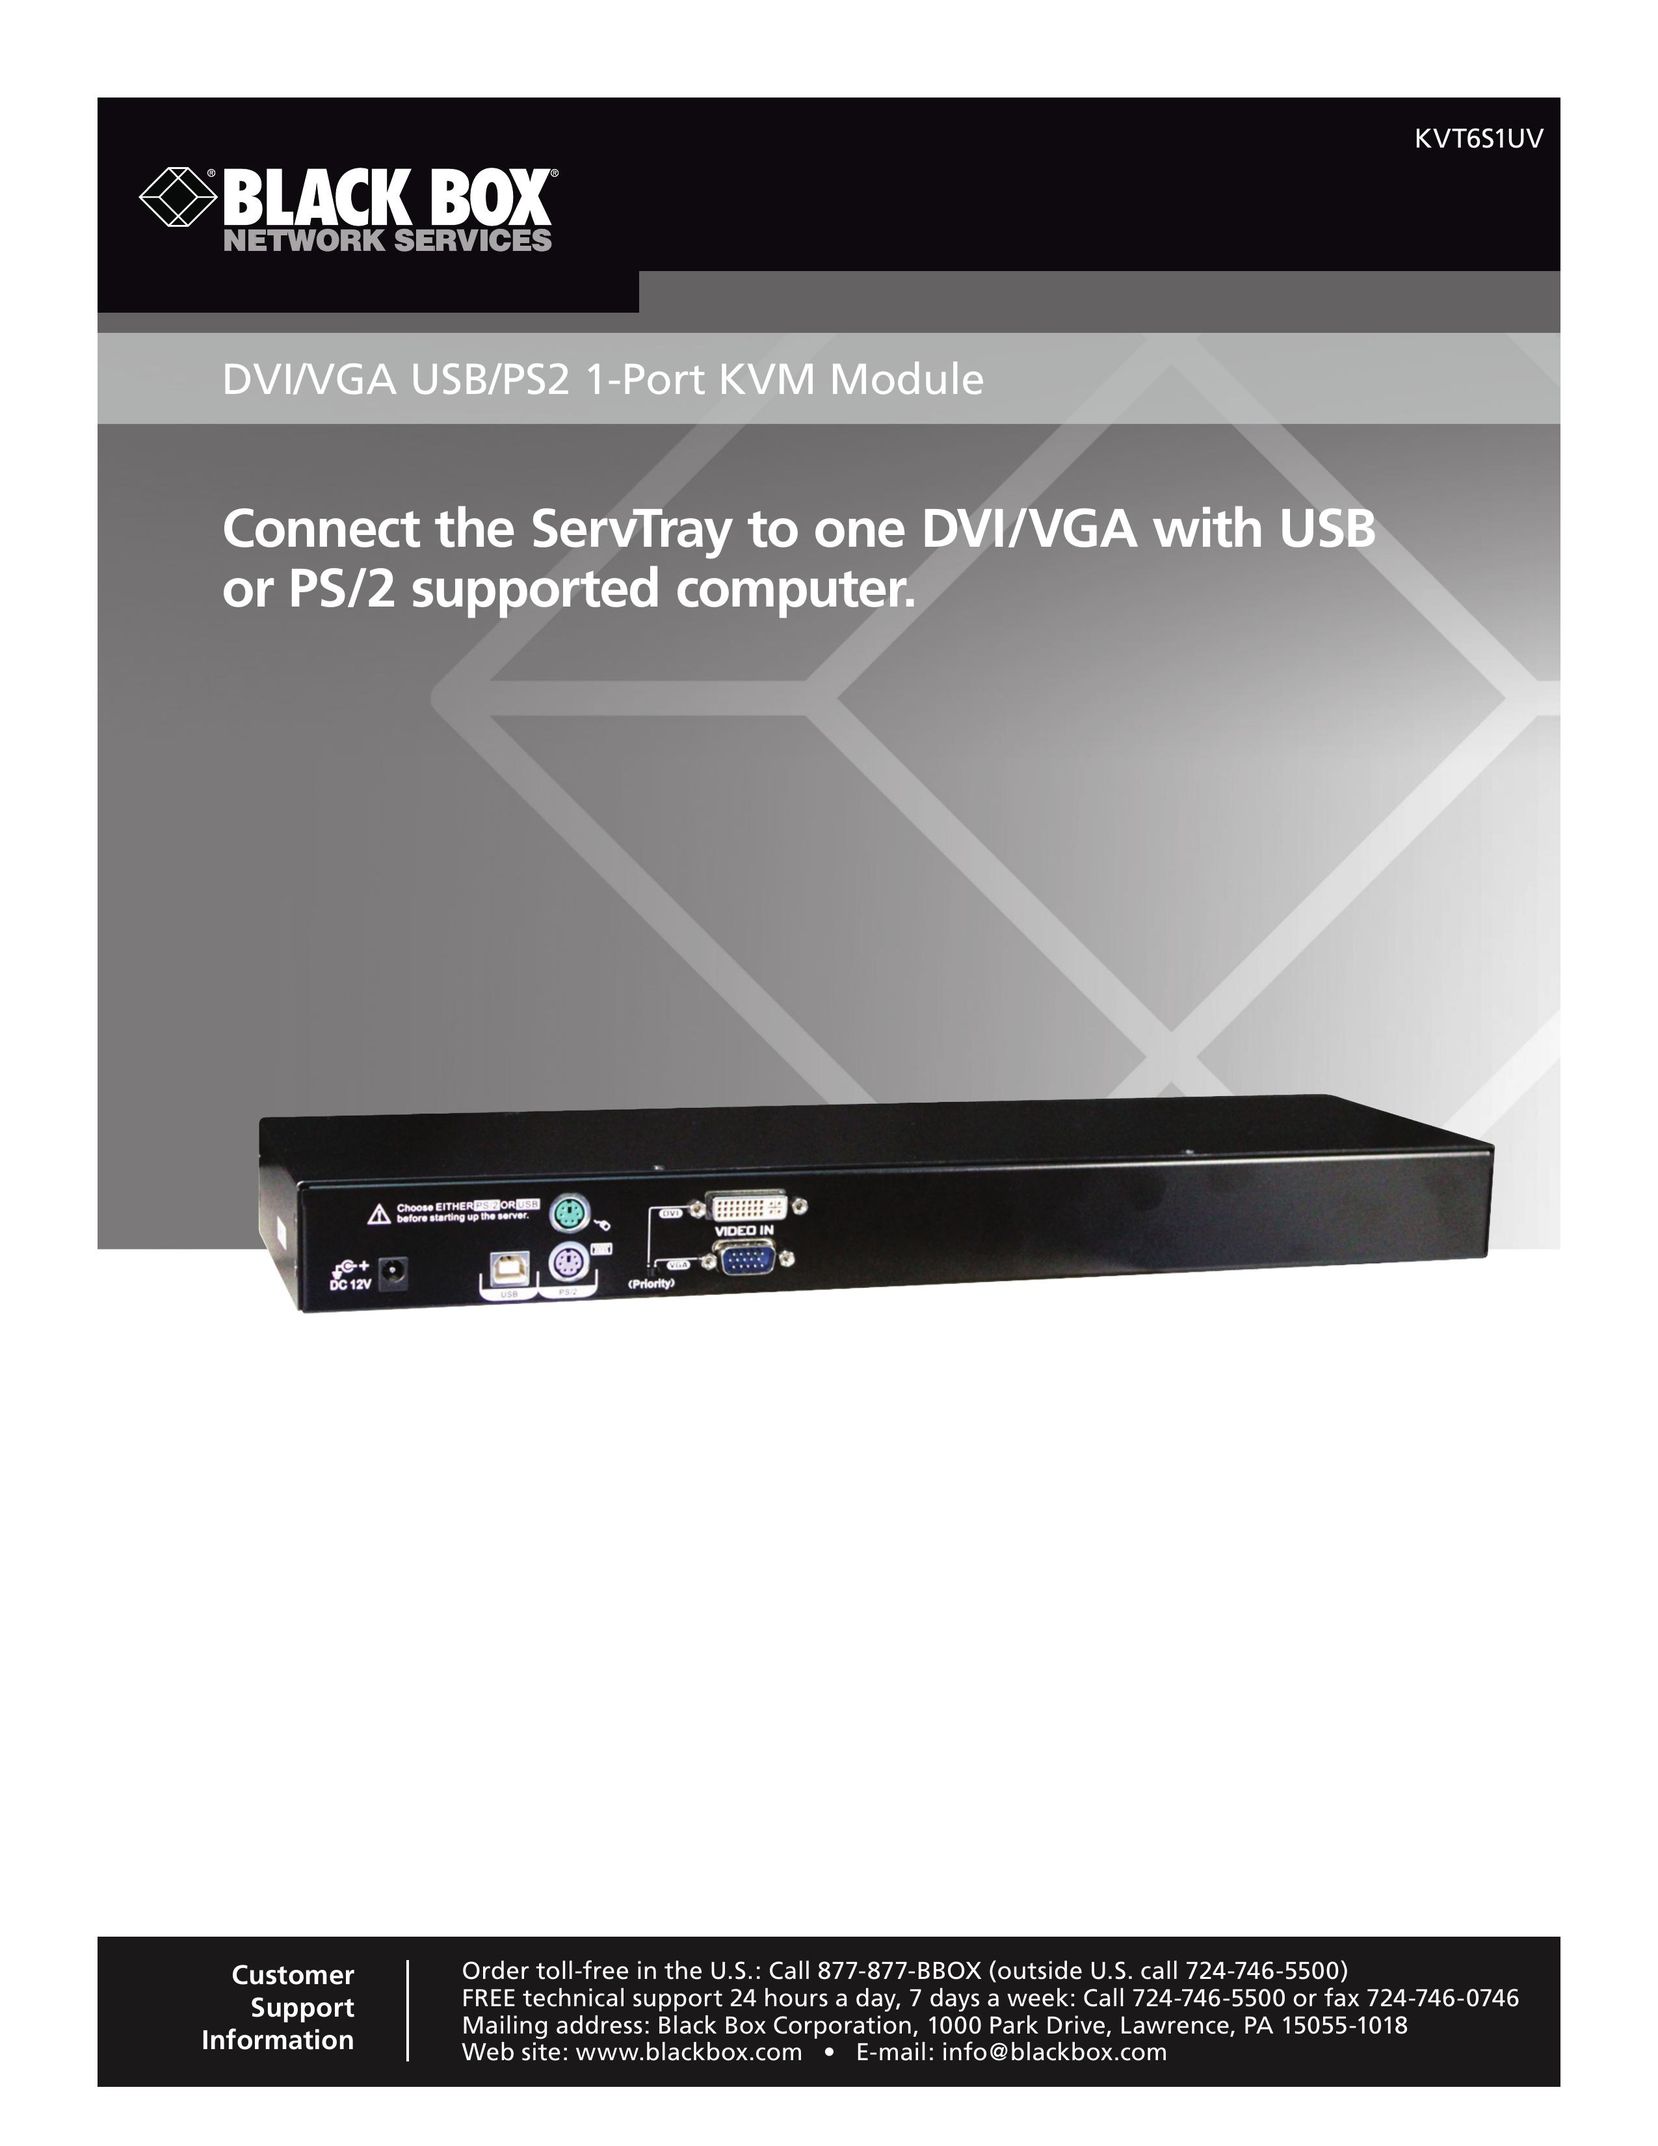 Black Box DVI/VGA USB/PS2 1-Port KVM Module Computer Accessories User Manual